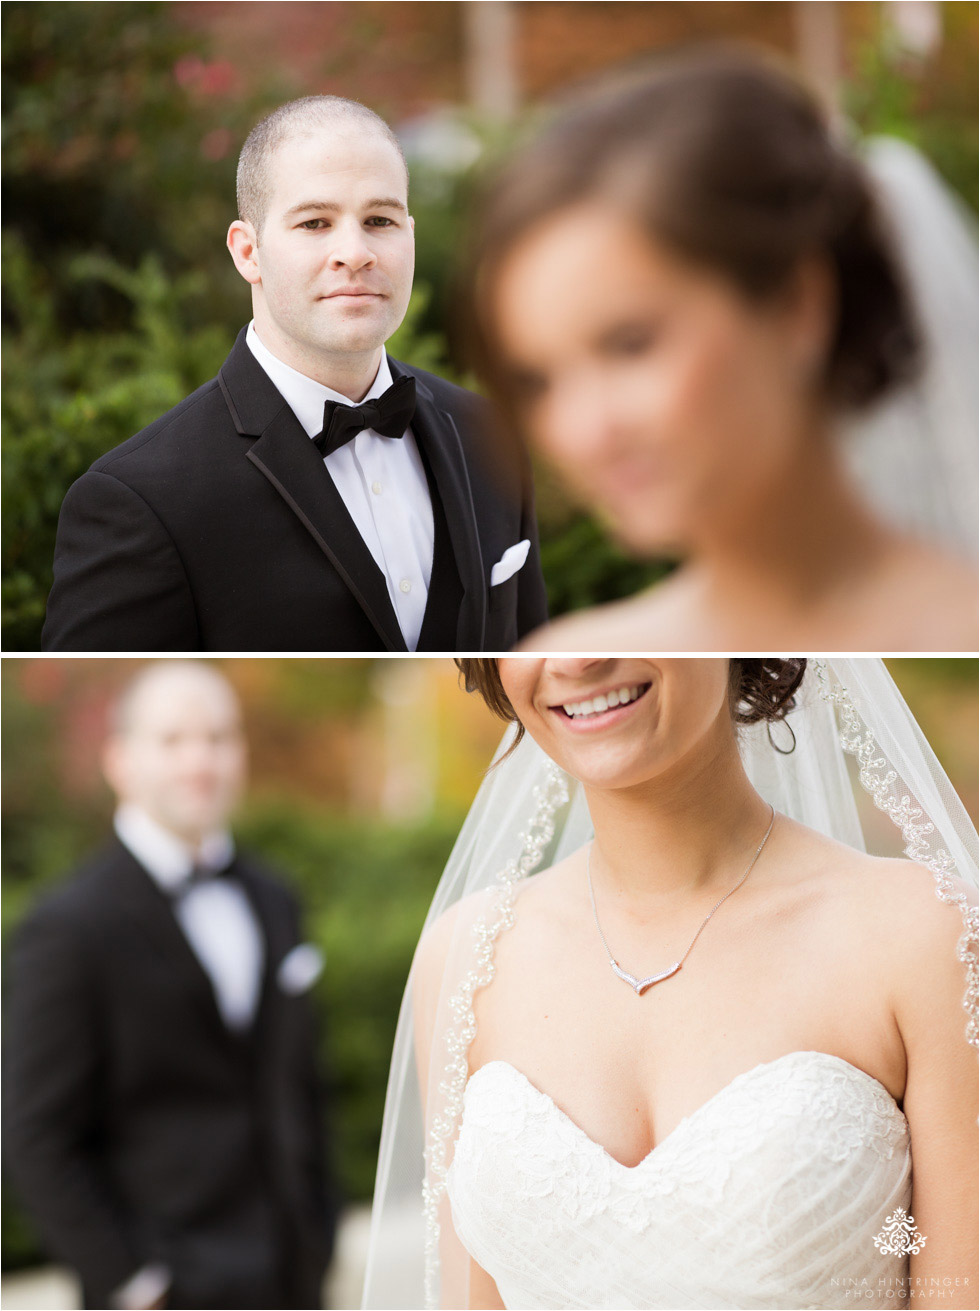 Bridal and groom at Saint Josephs University campus in Philadelphia, Pennsylvania - Blog of Nina Hintringer Photography - Wedding Photography, Wedding Reportage and Destination Weddings